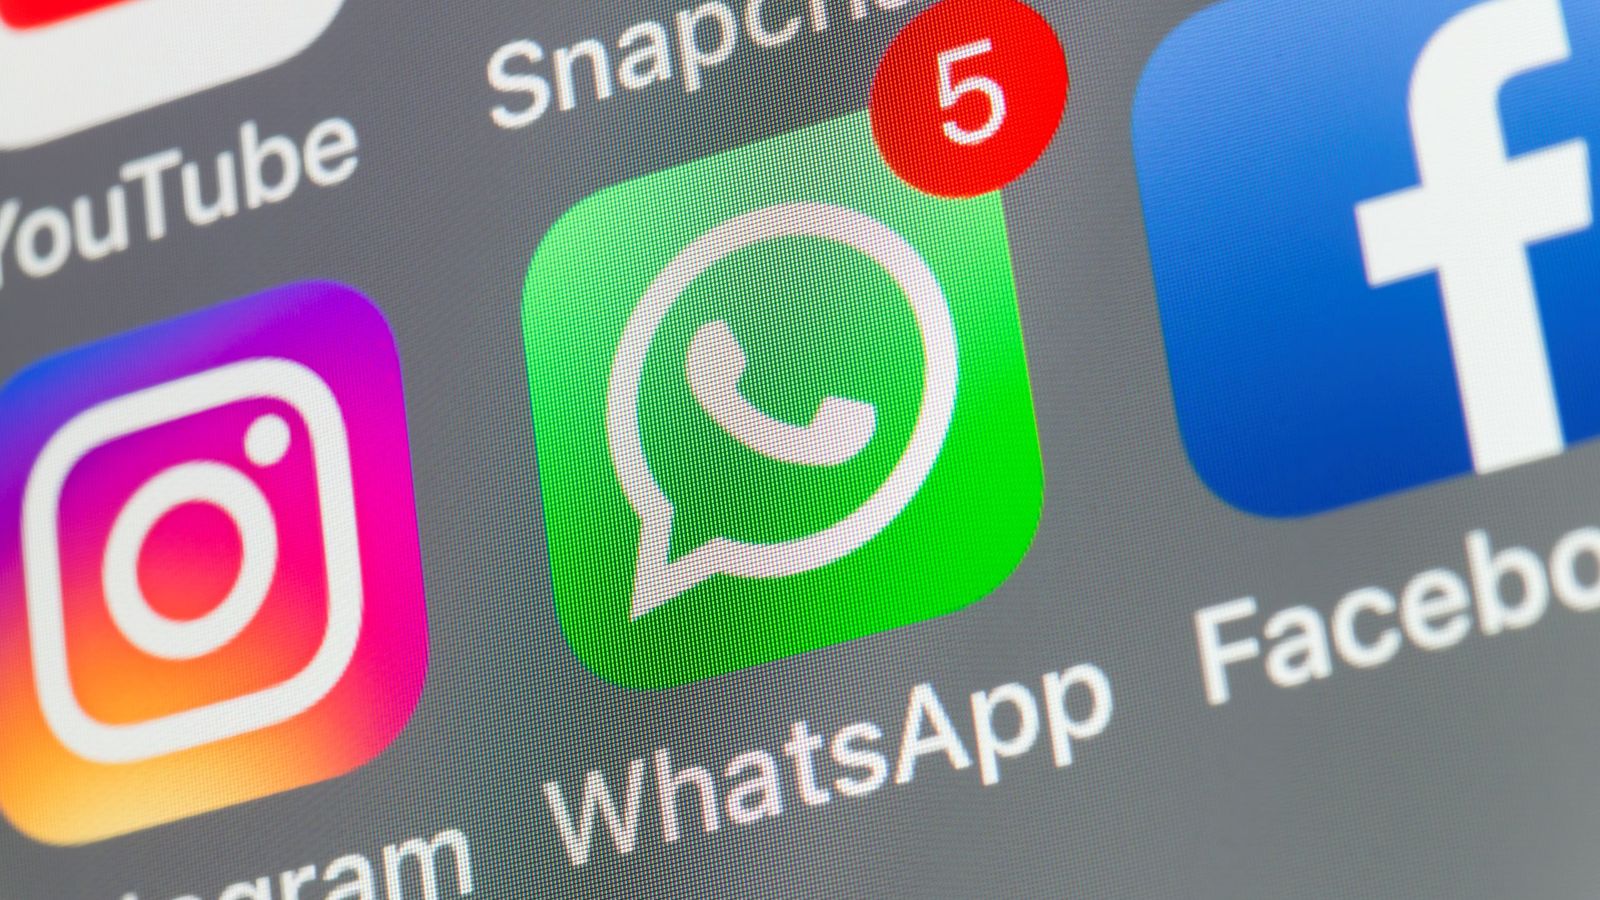 Facebook, WhatsApp, Instagram down globally - Daily Post Nigeria